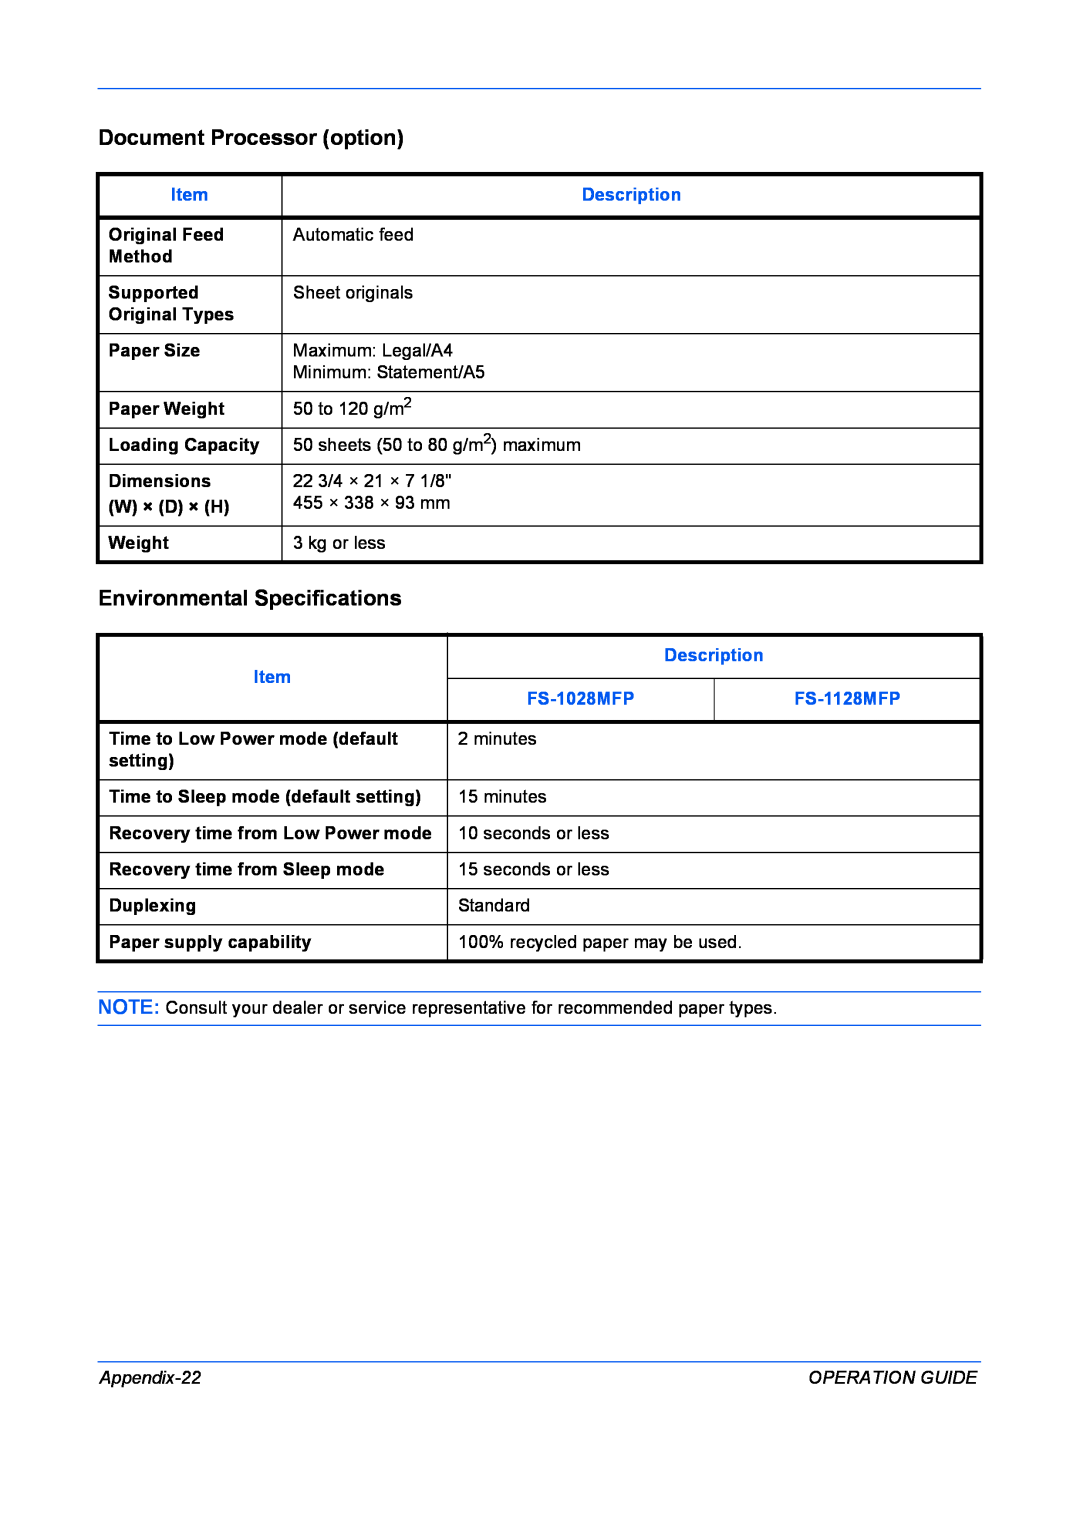 Kyocera FS-1028MFP manual Document Processor option, Environmental Specifications, Description, FS-1128MFP, Appendix-22 